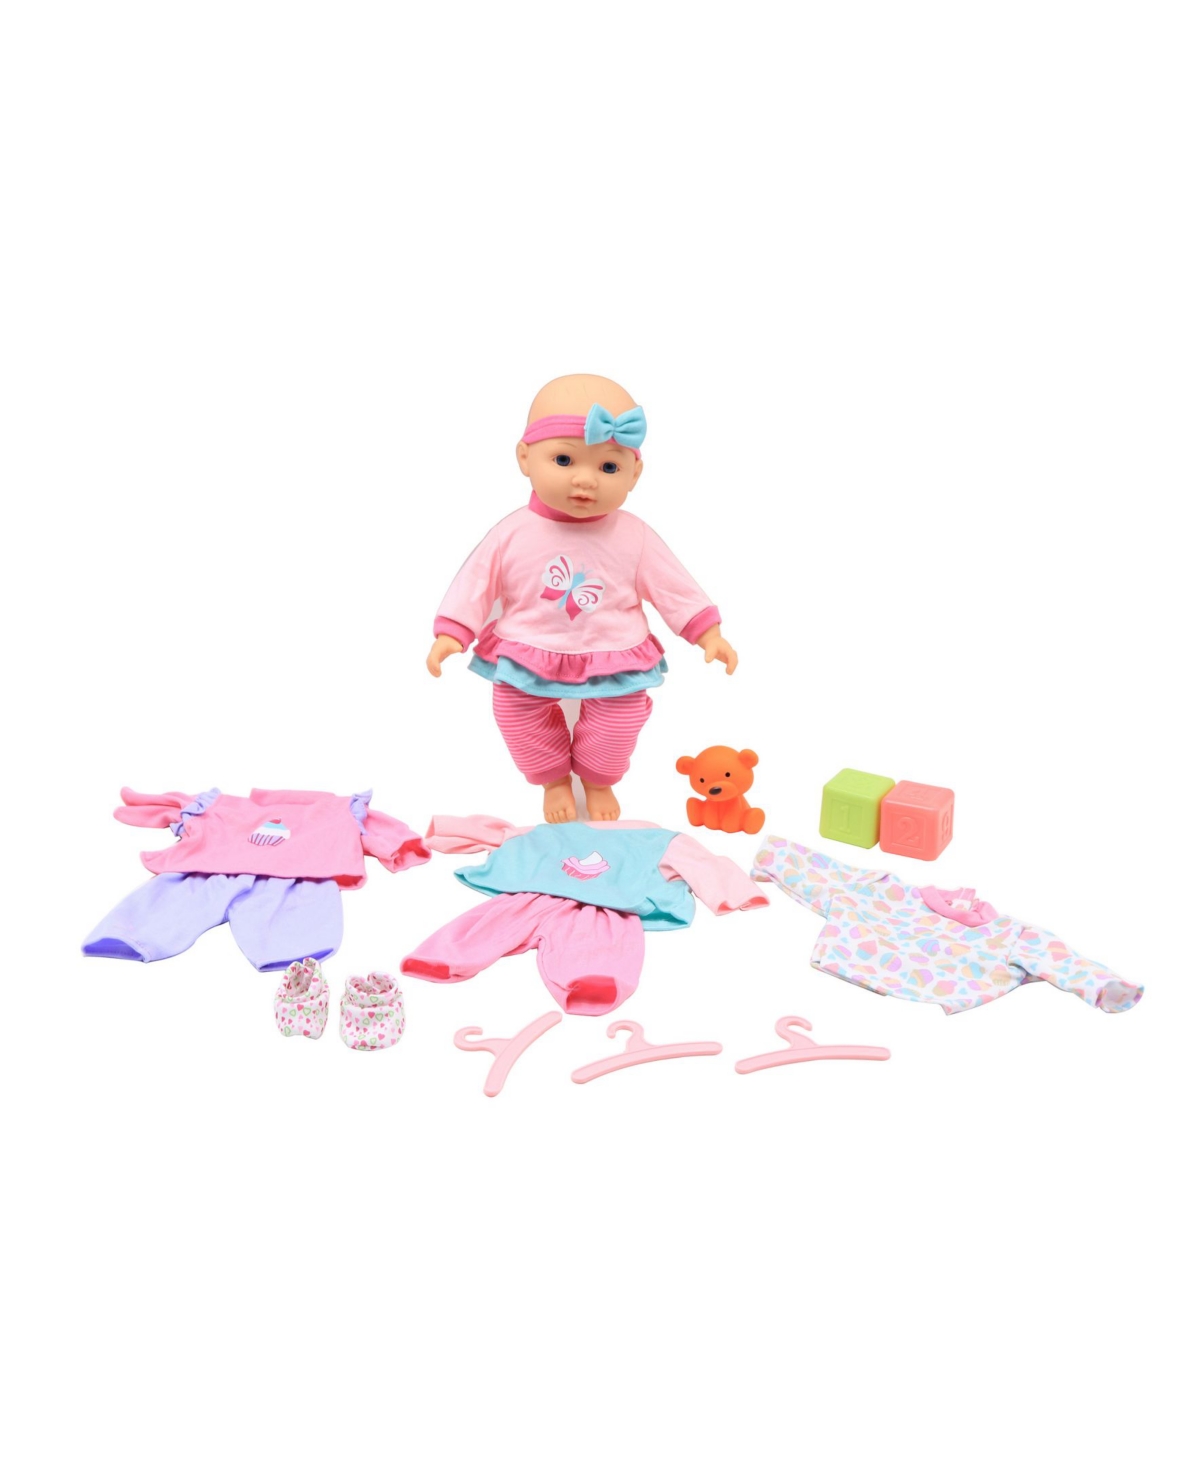 Redbox My Lil Wardrobe With 14" Toy Baby Doll In Multi